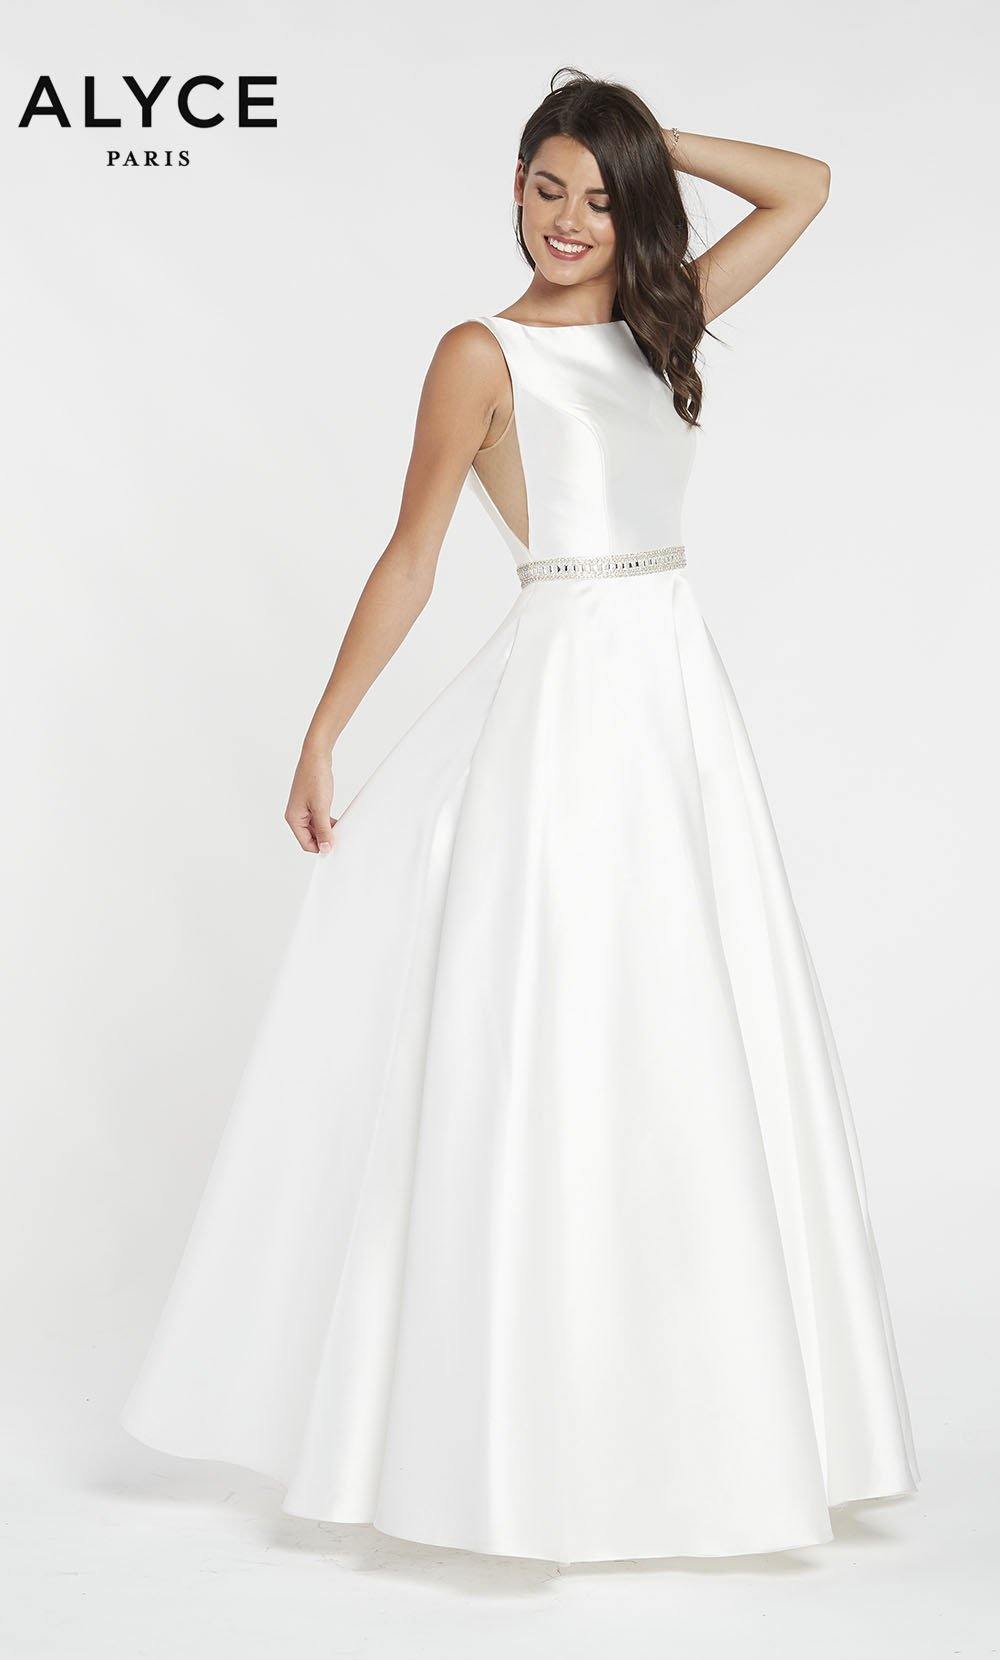 White Dresses for Graduation and Weddings - Alyce Paris